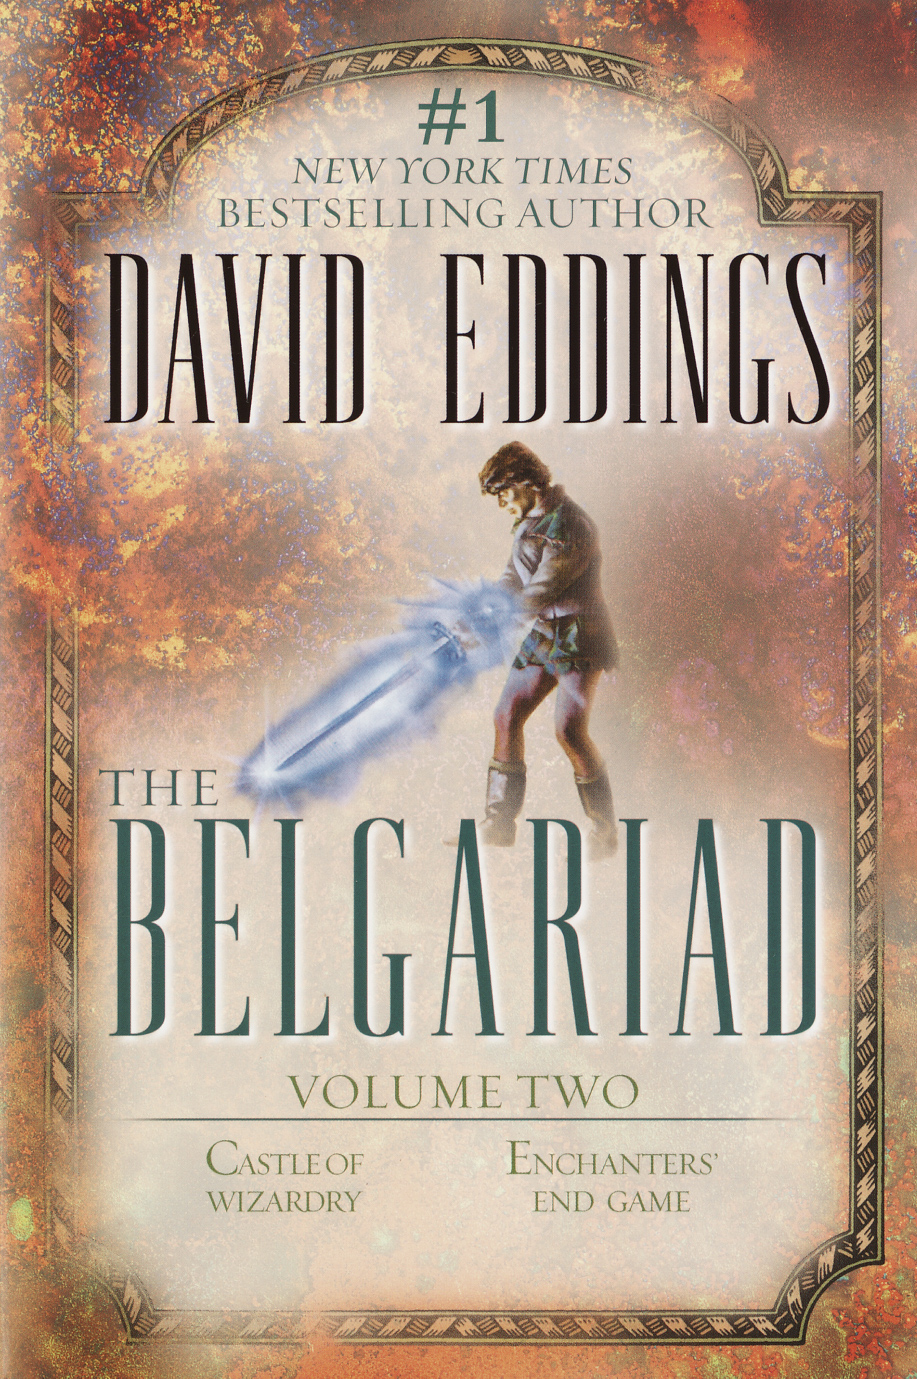 Belgariad, David Eddings, Volume Two